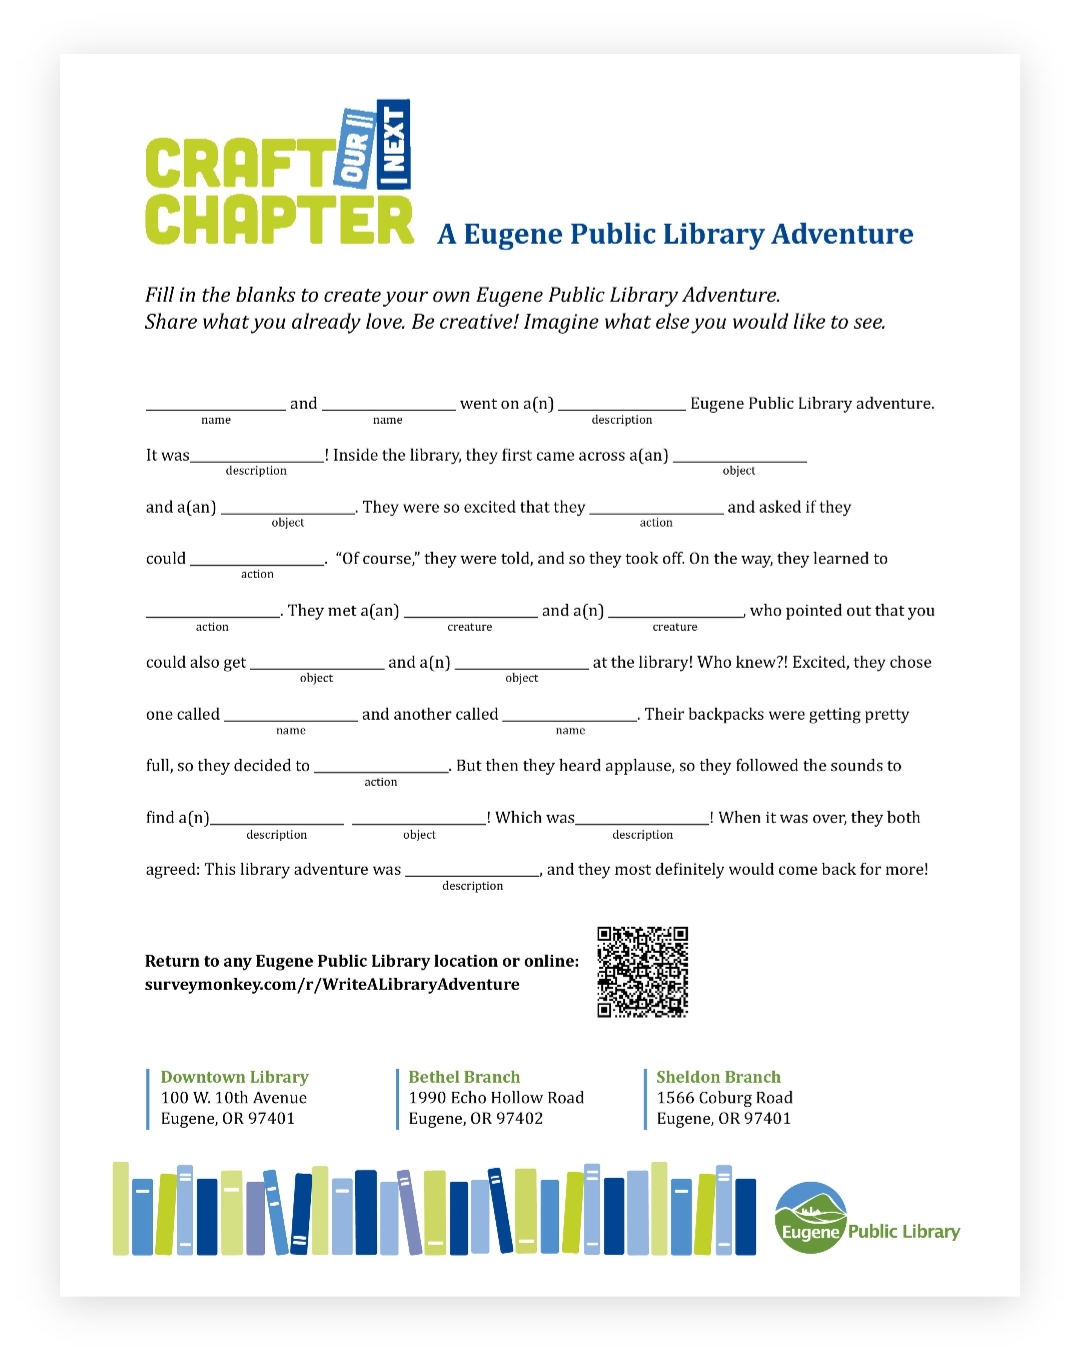 A Eugene Public Library adventure